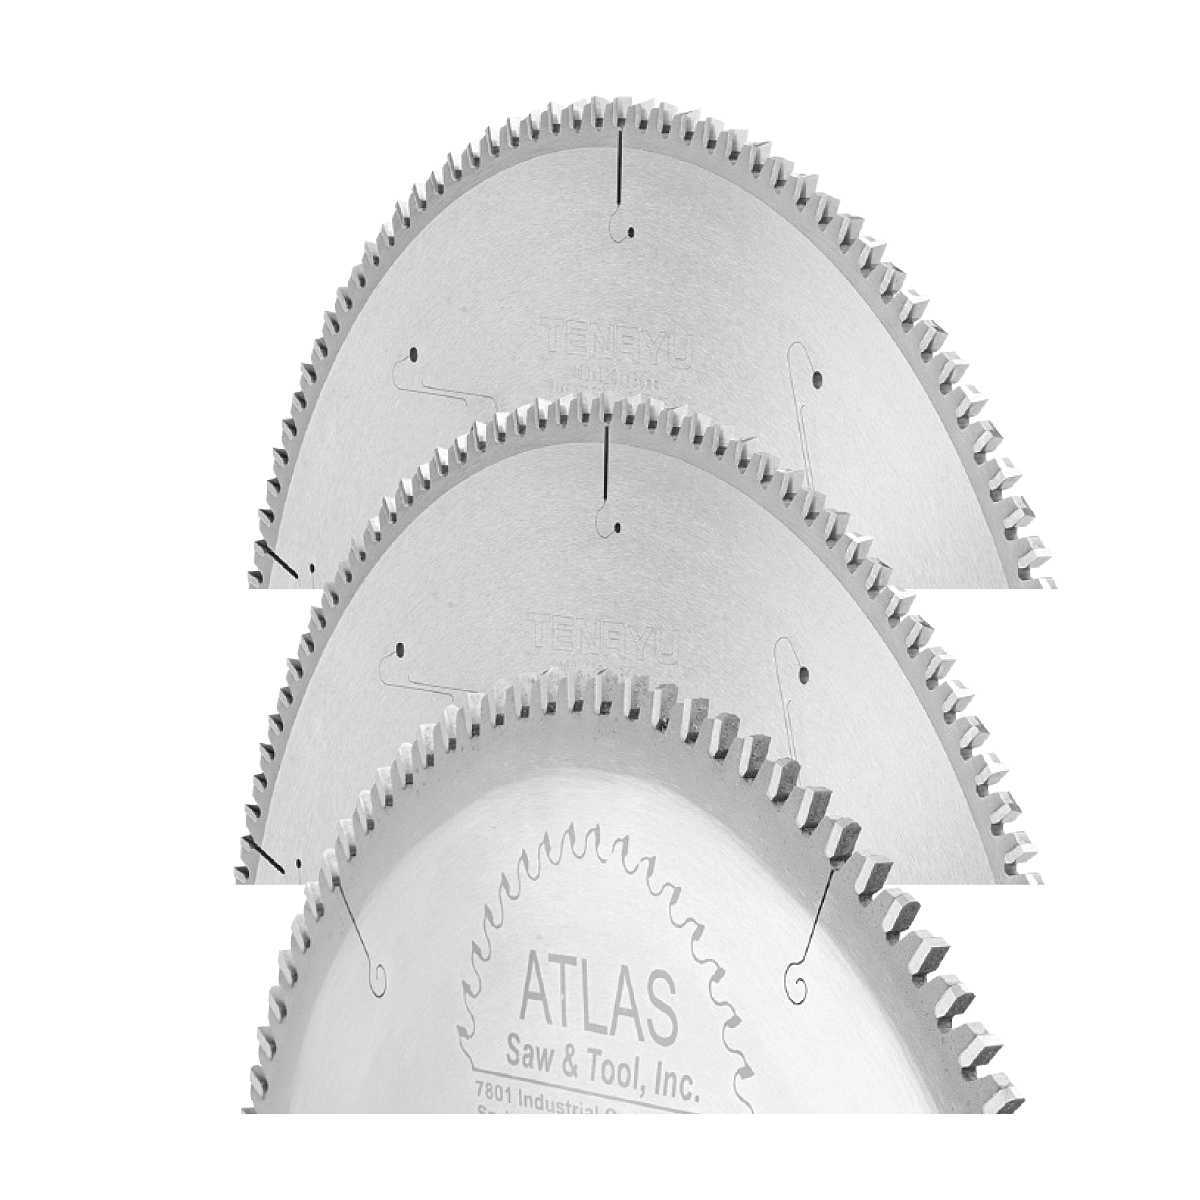 Atlas blades by Fletcher